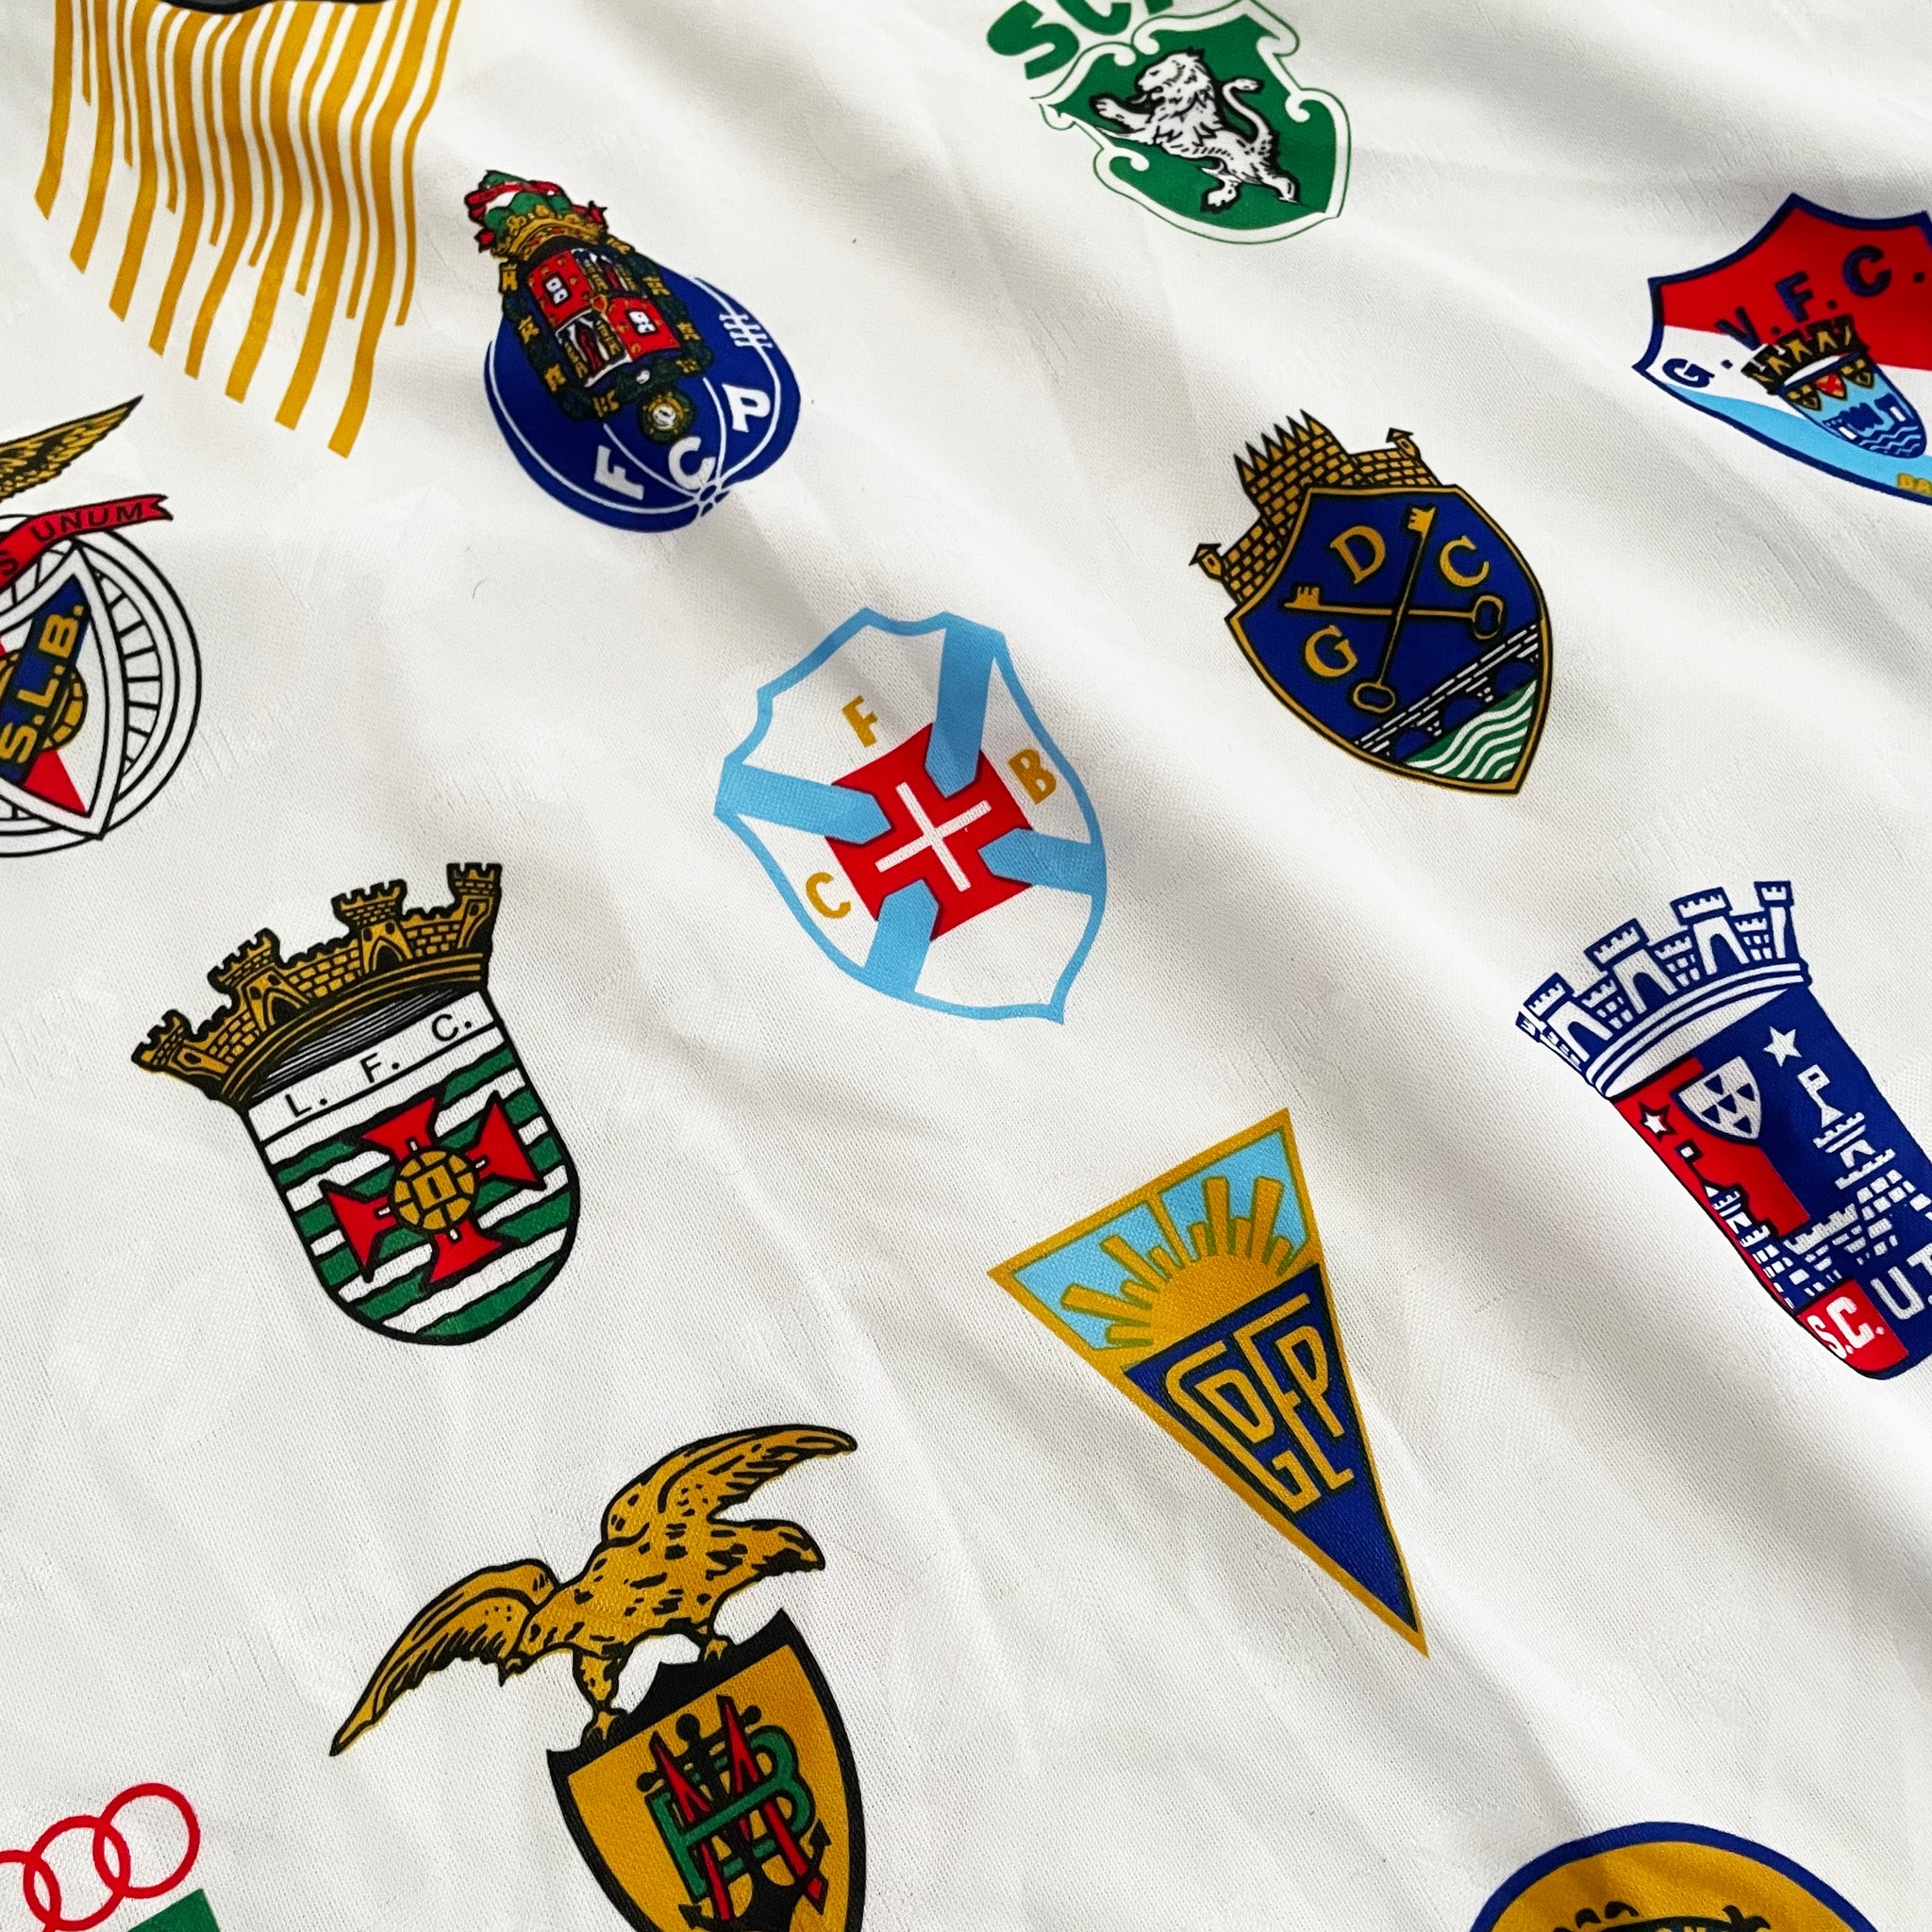 Liga Portugal Badge Kit - L